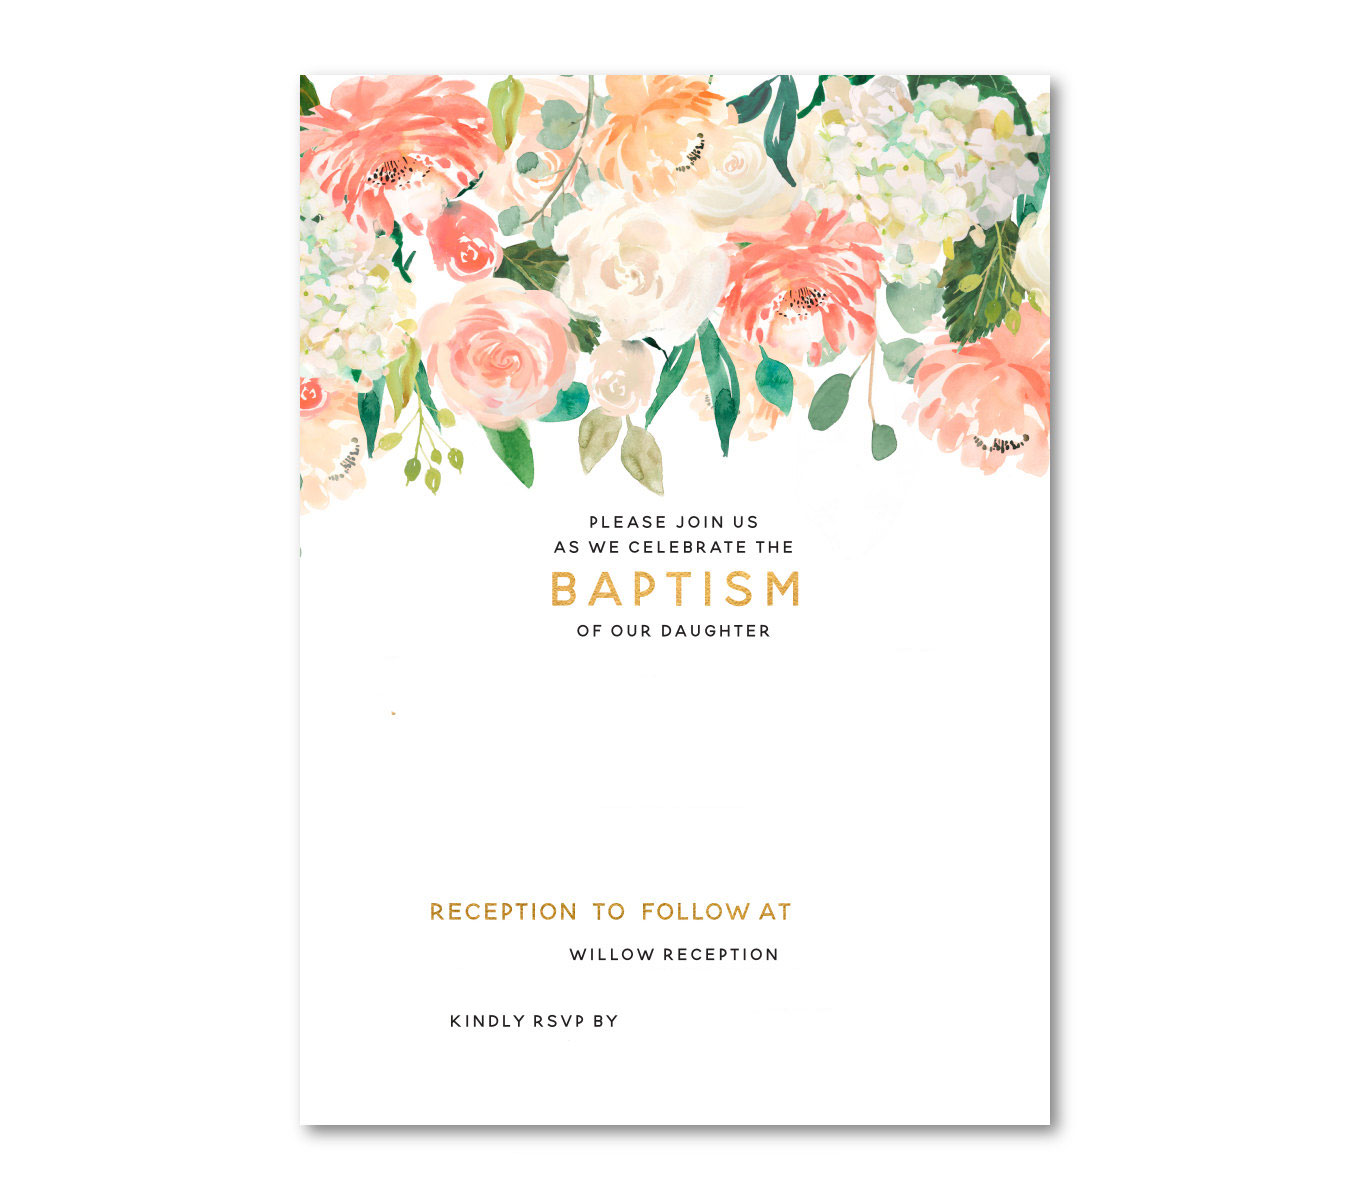 Baptism Invitation Template Microsoft Word from www.dolanpedia.com